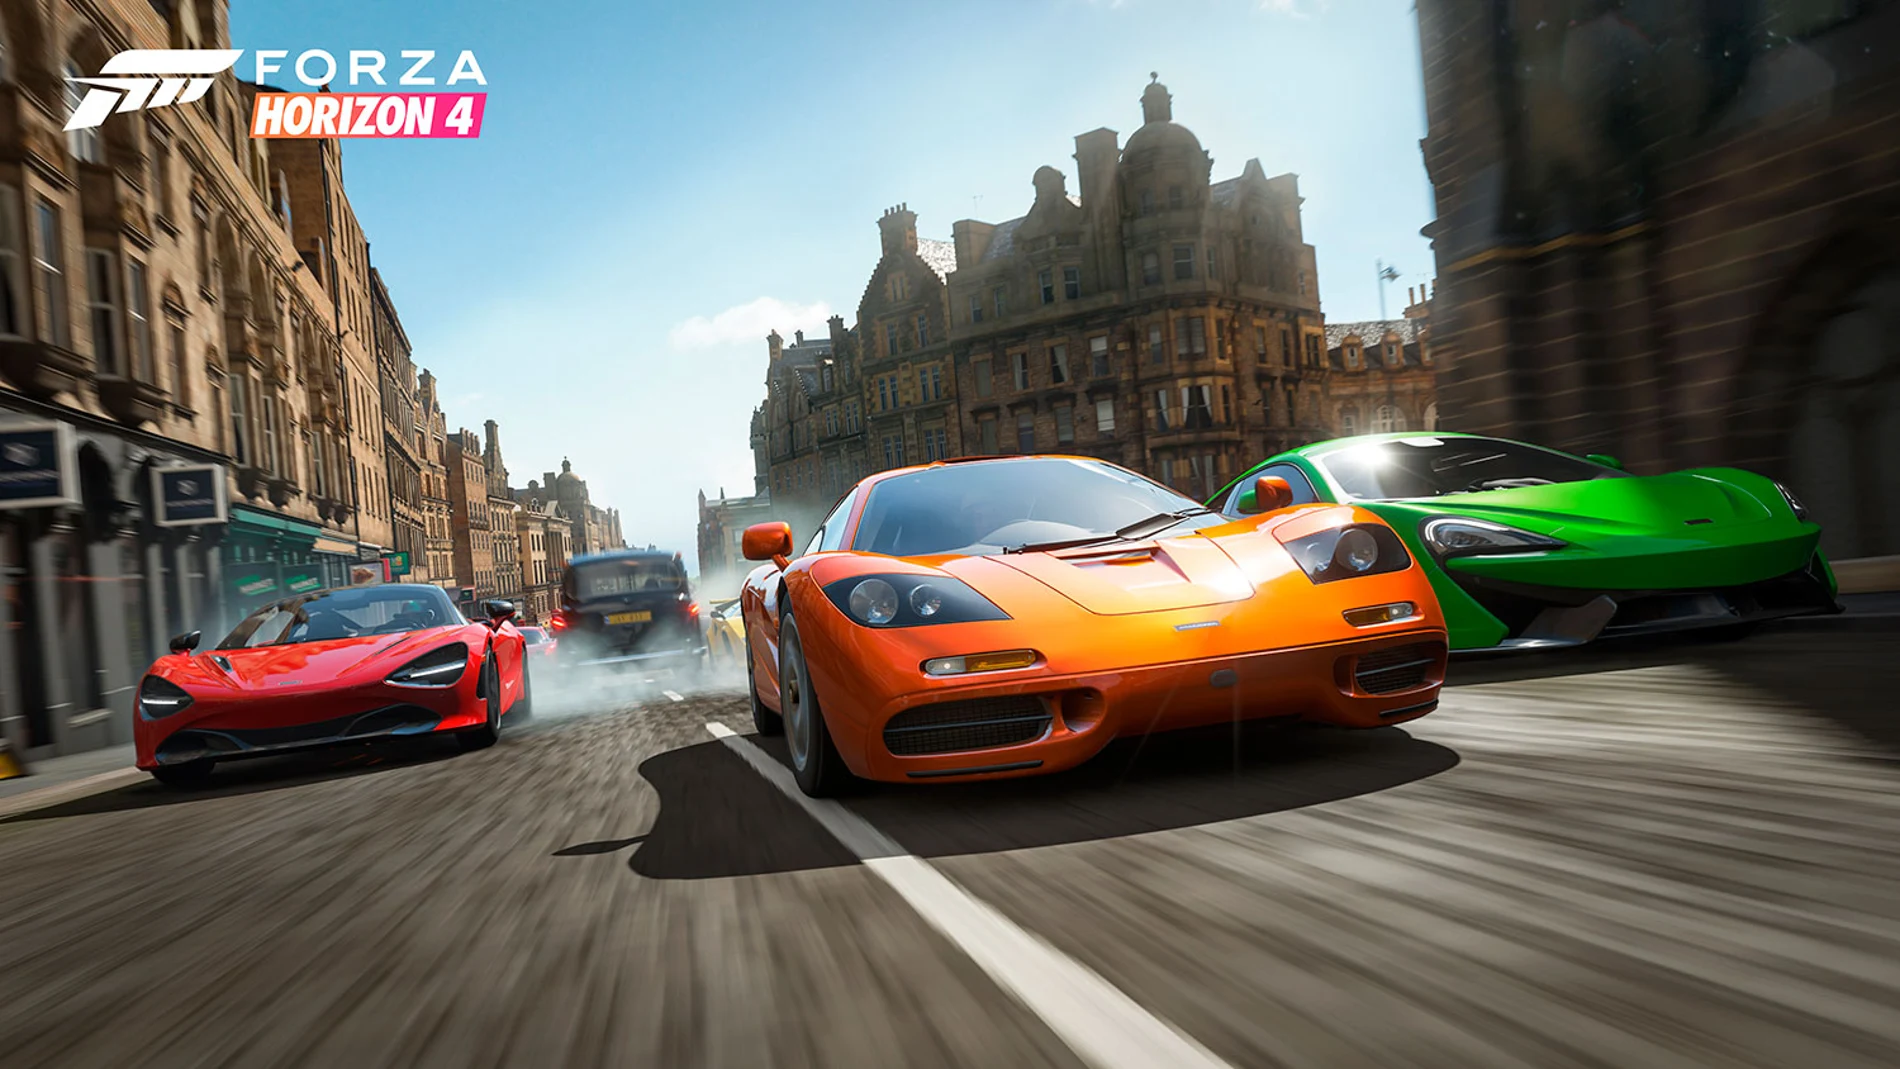 Forza Horizon 4 se podrá correr en Steam próximamente